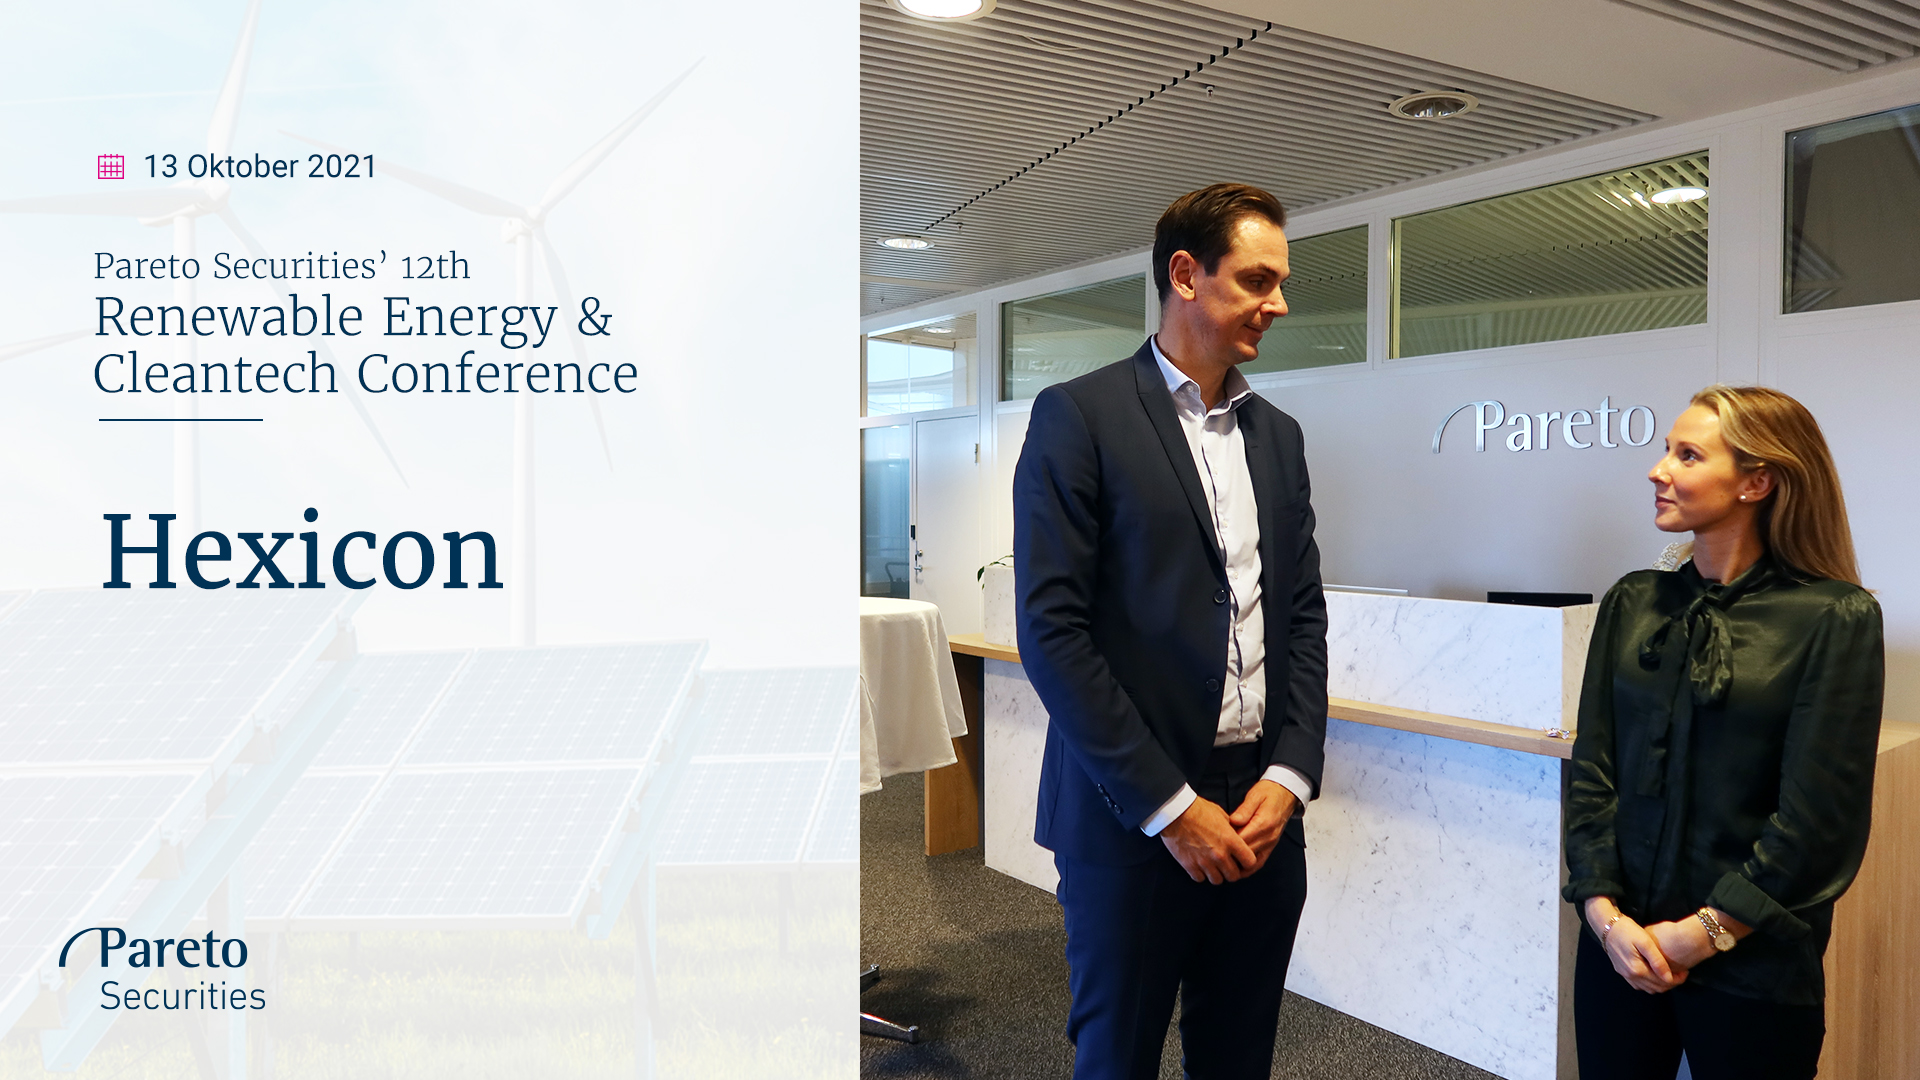 Hexicon / Pareto Securities' Renewable Energy & Cleantech Conference